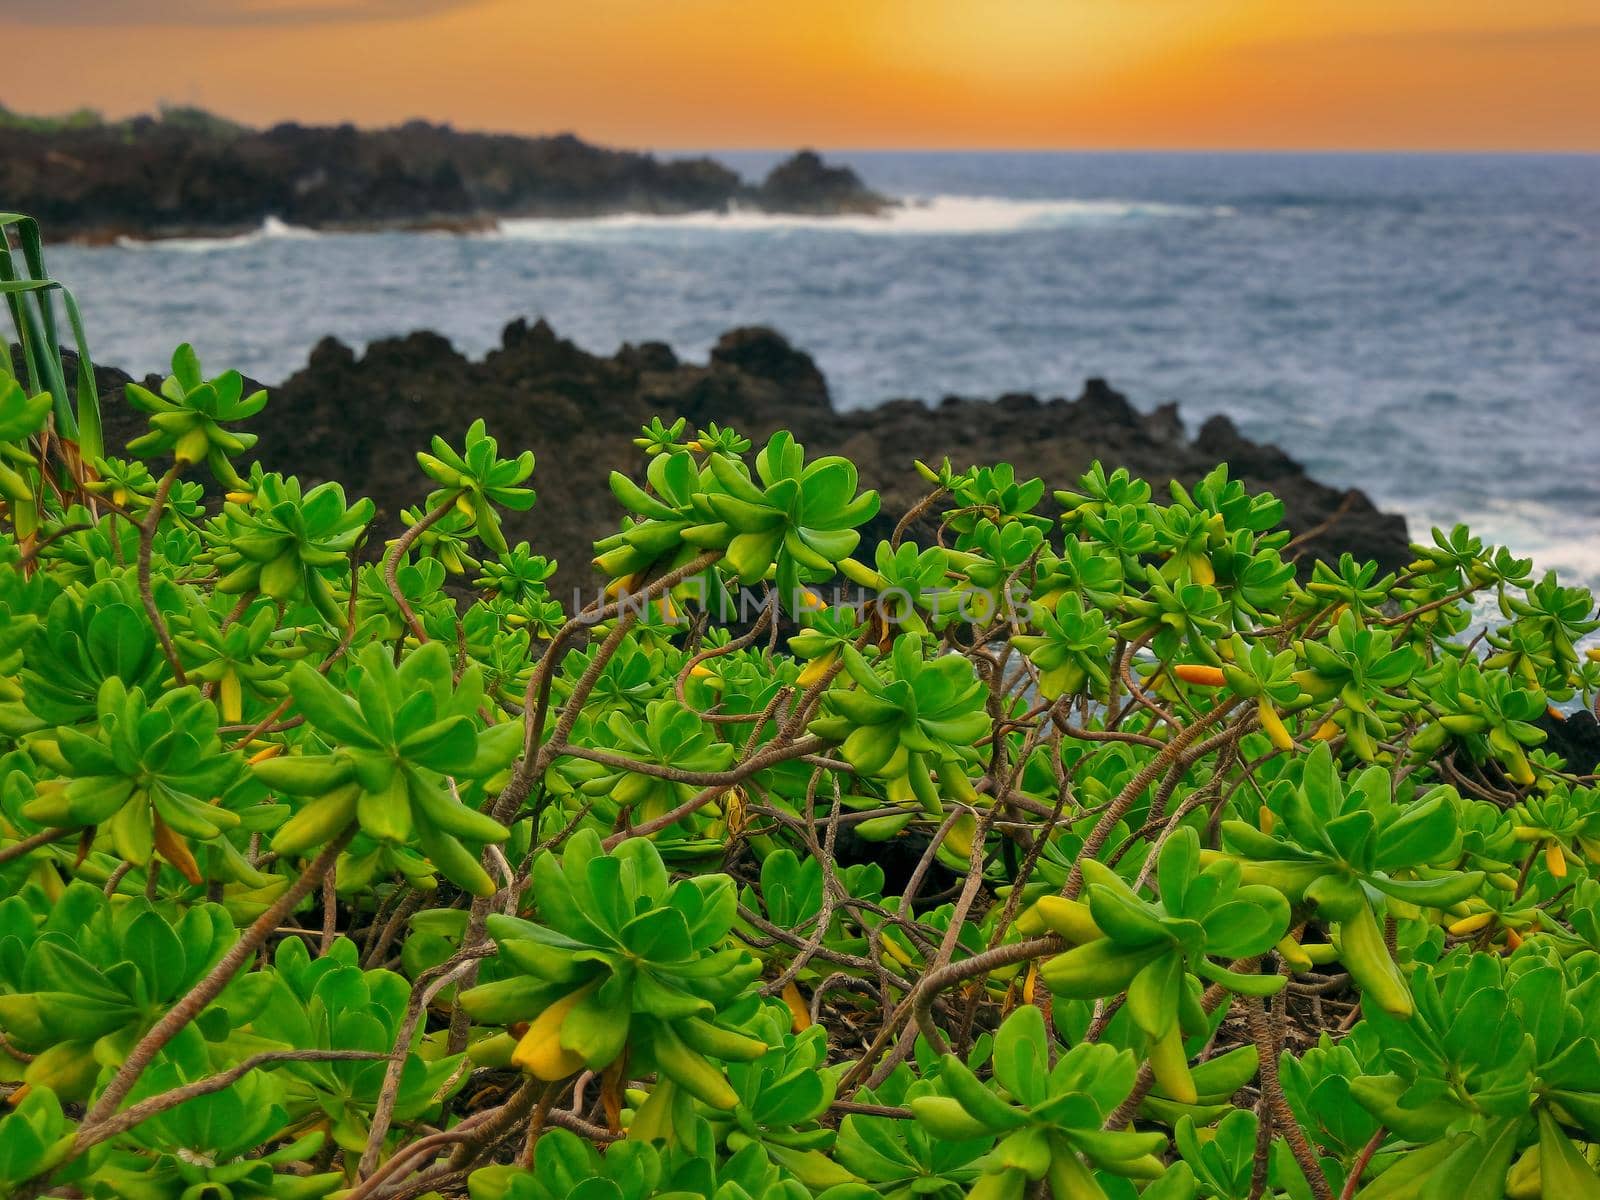 Naupaka Plants Grow Along Black Lava at Waianapanapa State Park in Hana, Hawaii by markvandam